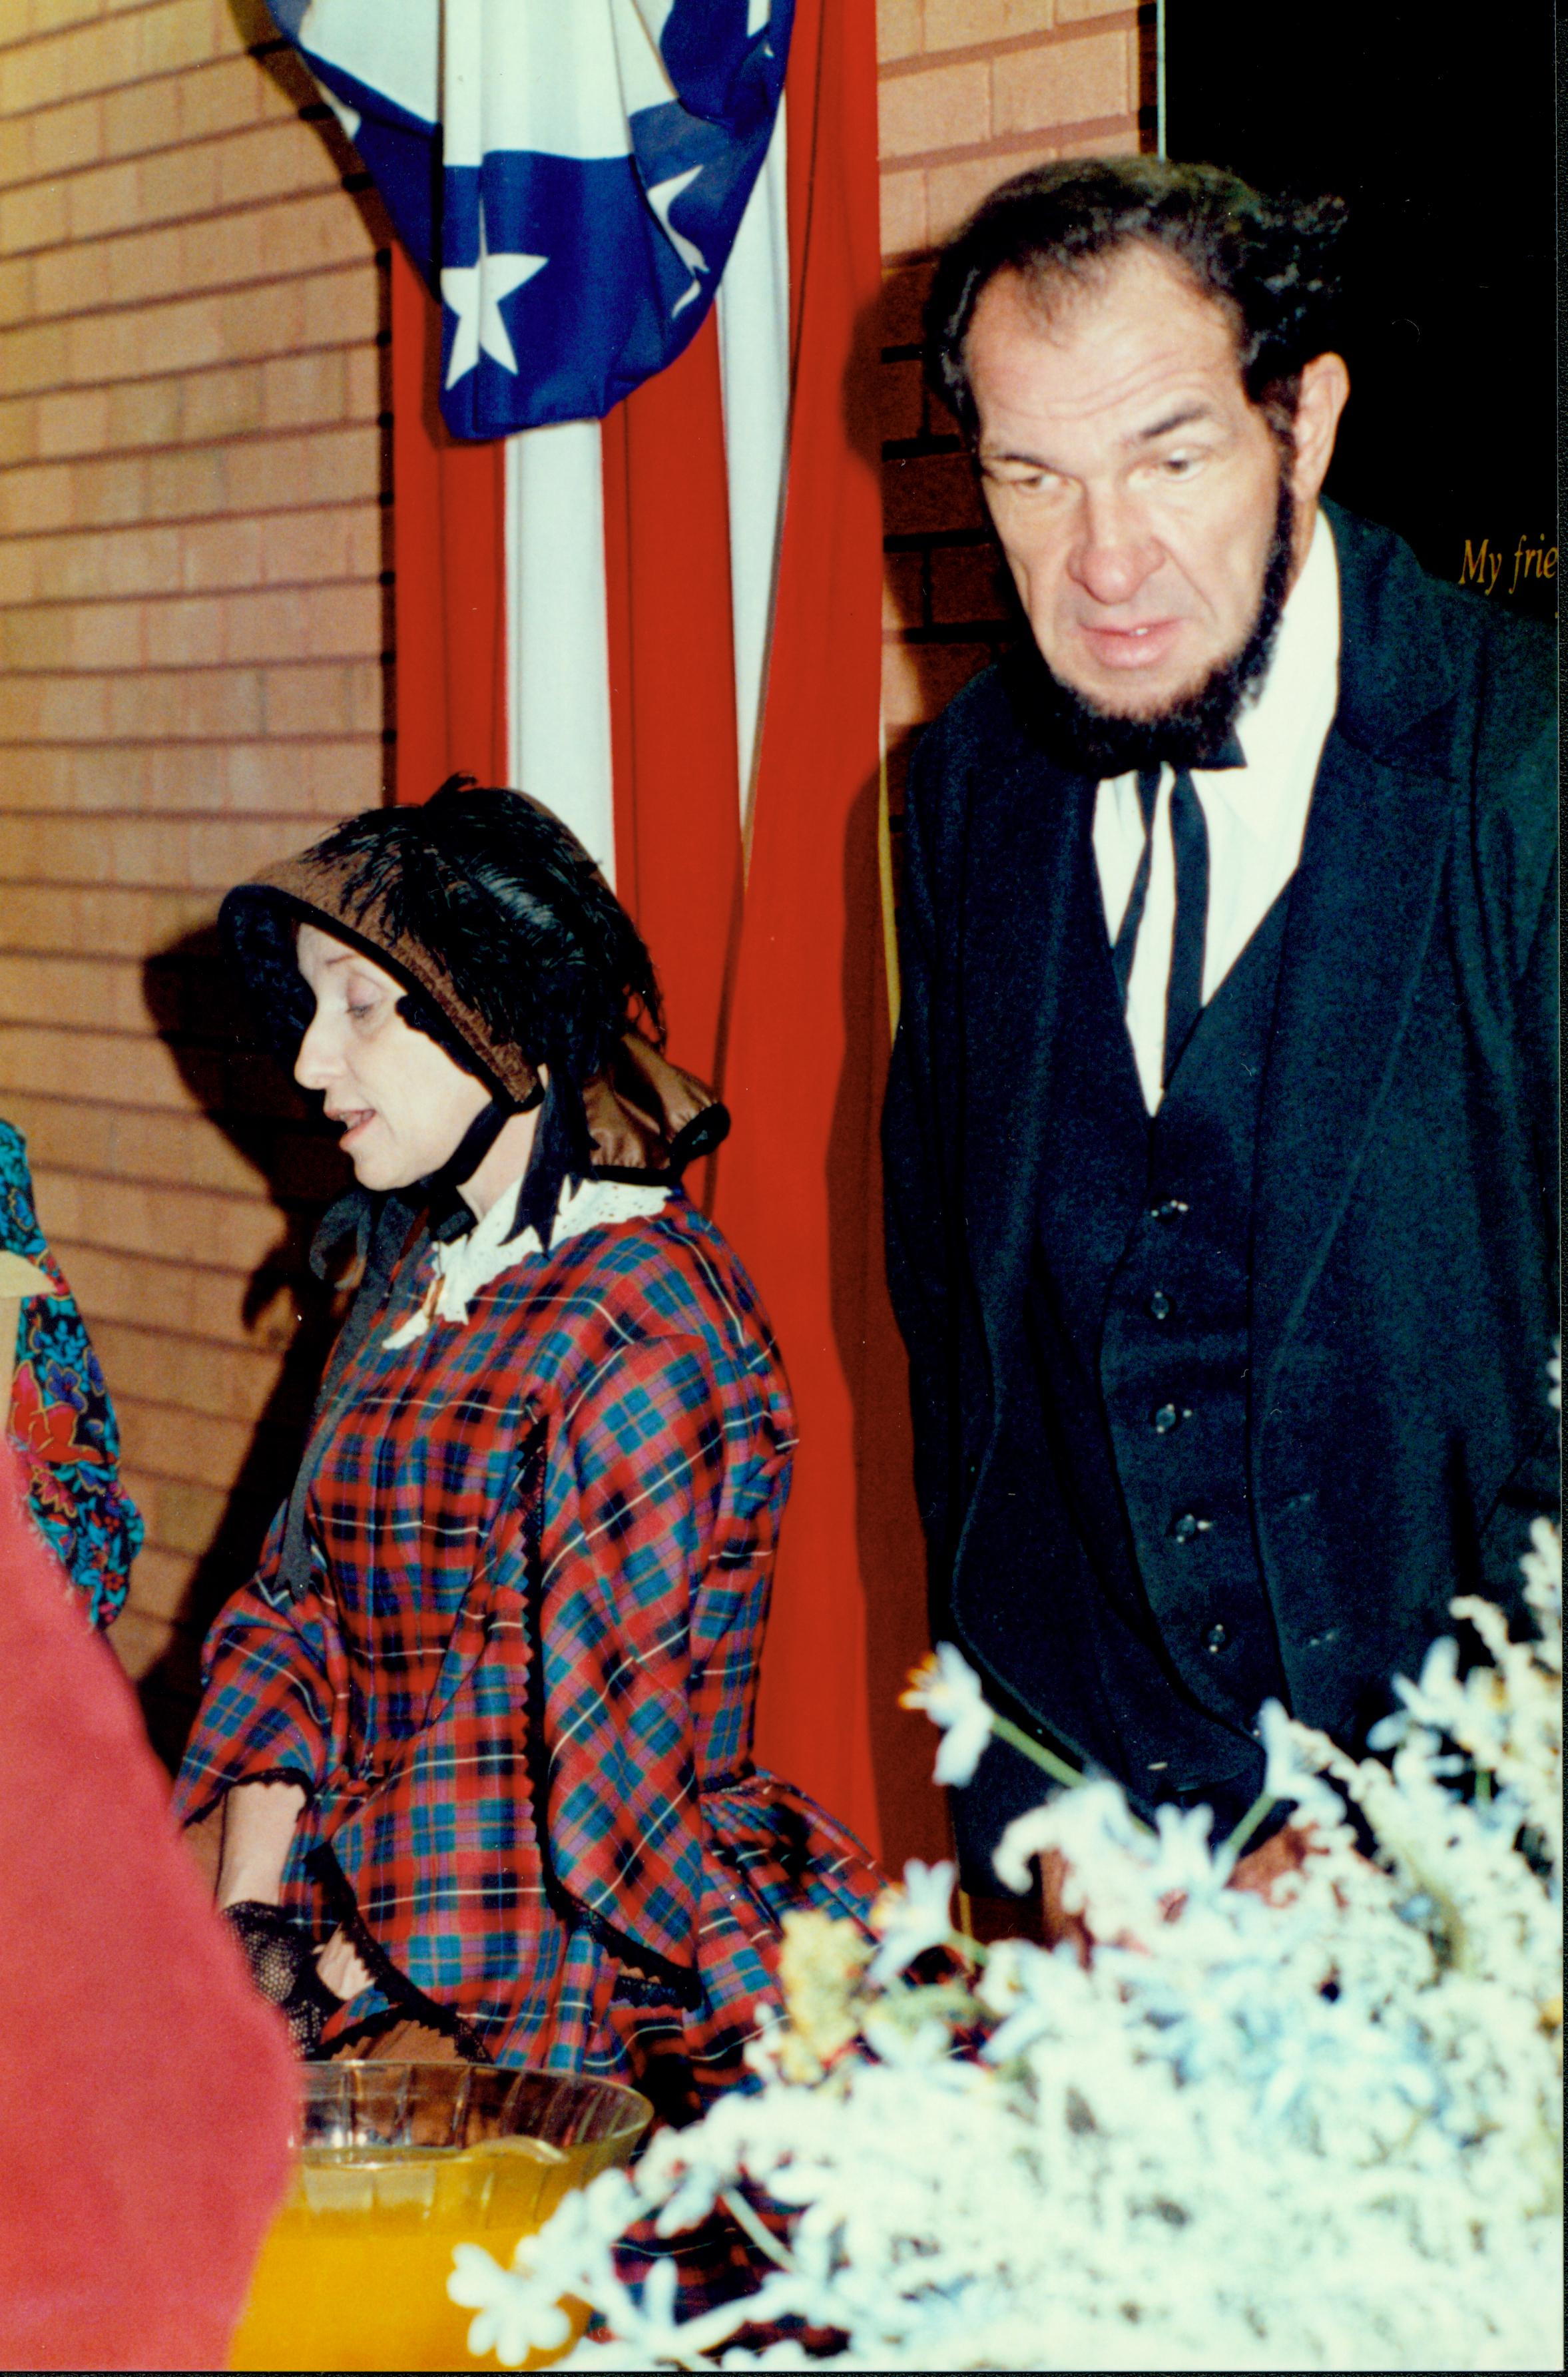 Judy Winkelman in Costume, Harry Hahn as Lincoln Interpretation, Costumes